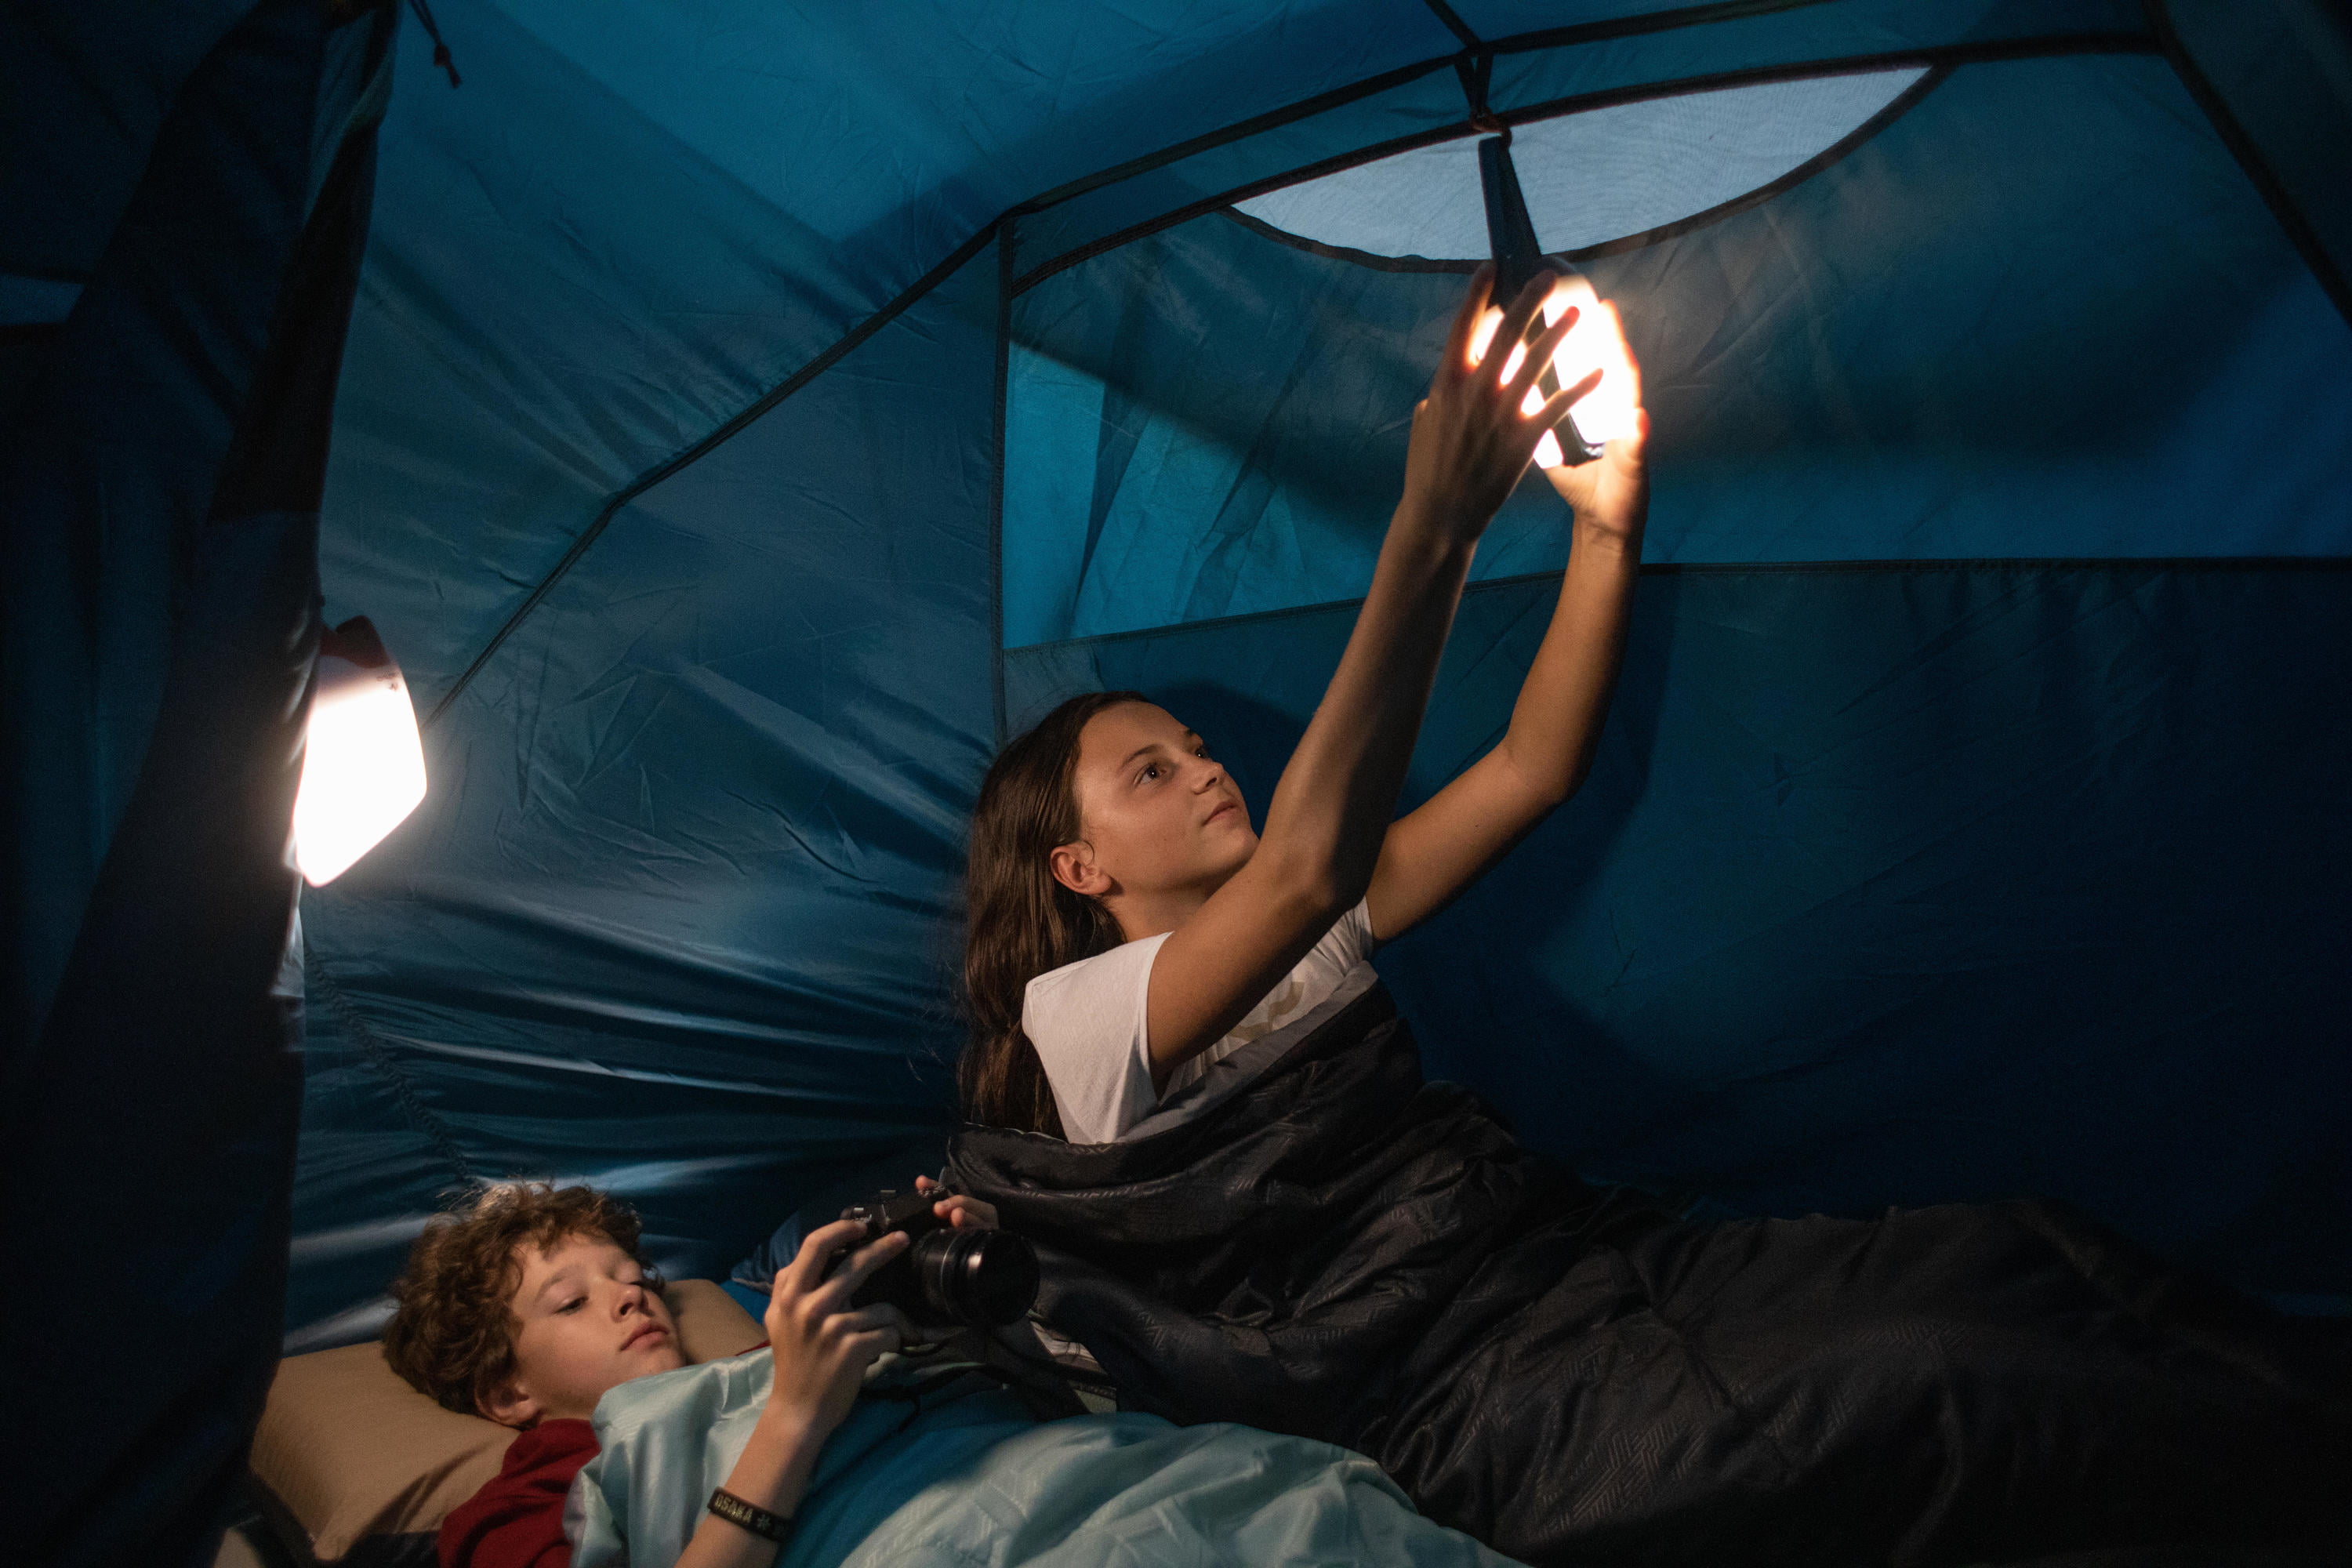 Quechua Arpenaz, 50° Camping Sleeping Bag in Blue